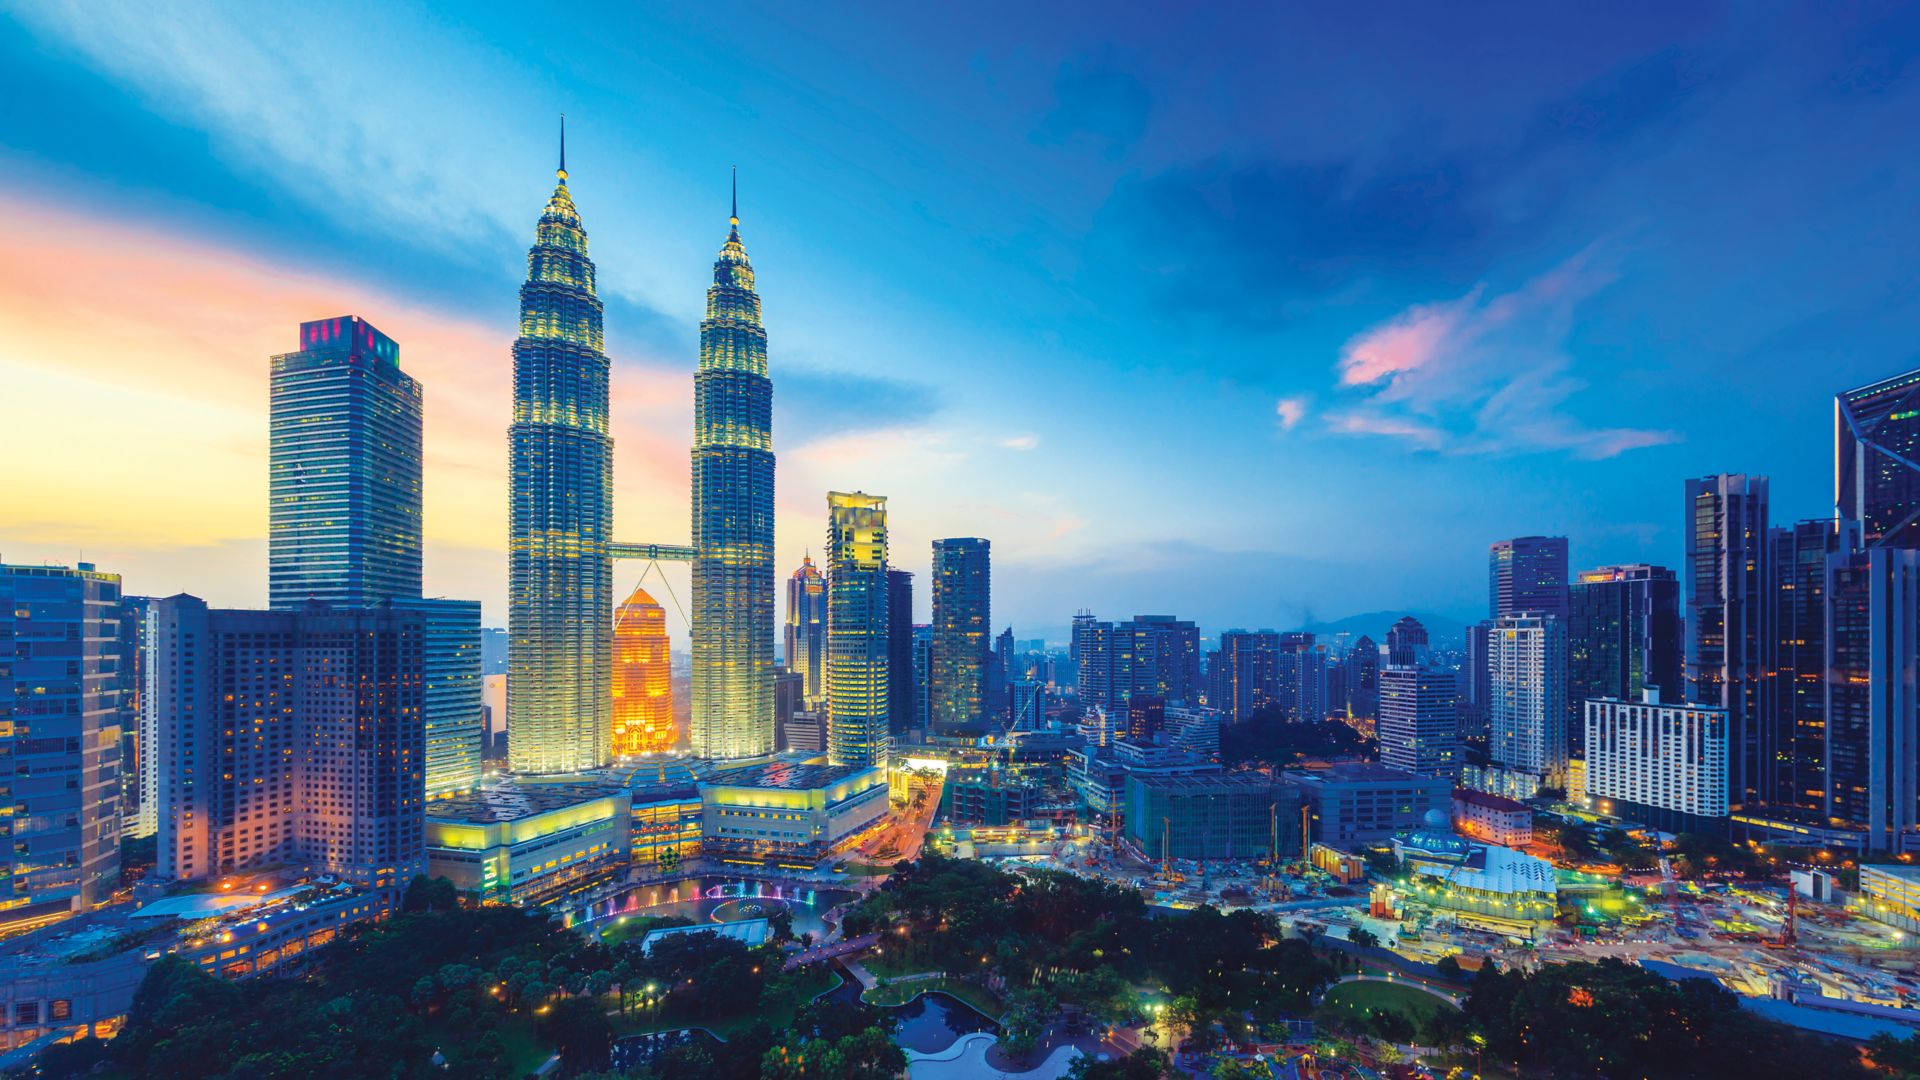 View of Kuala Lumpur skyline with Petronas twin towers at twilight